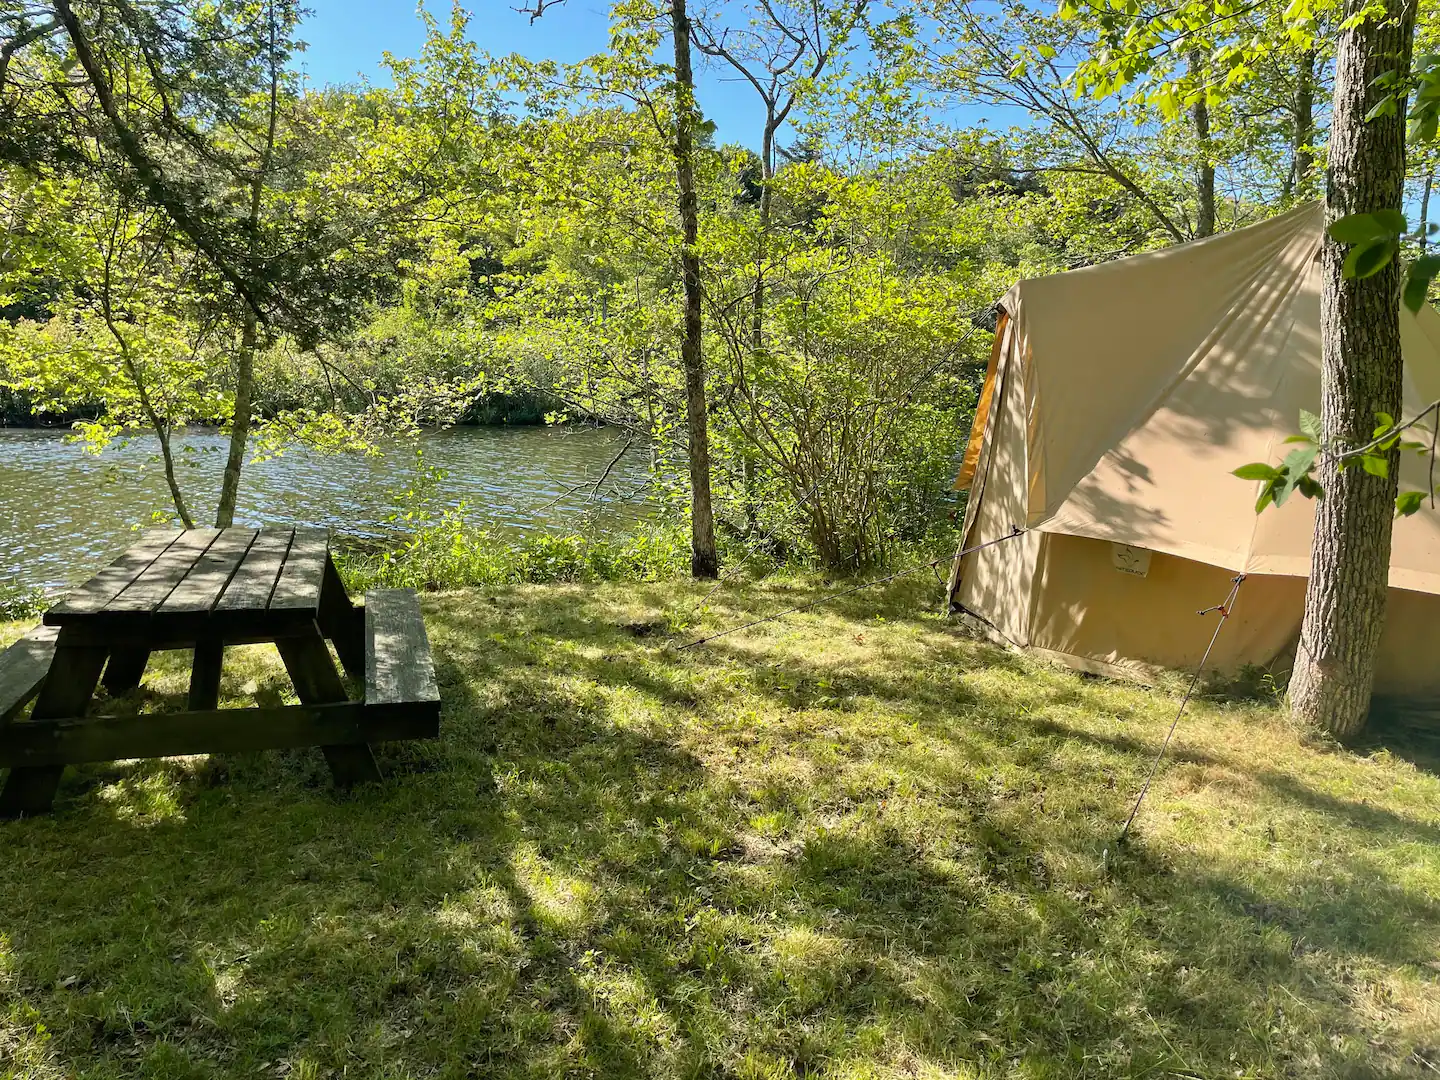 The Getaway Yurt Glamping Rhode Island